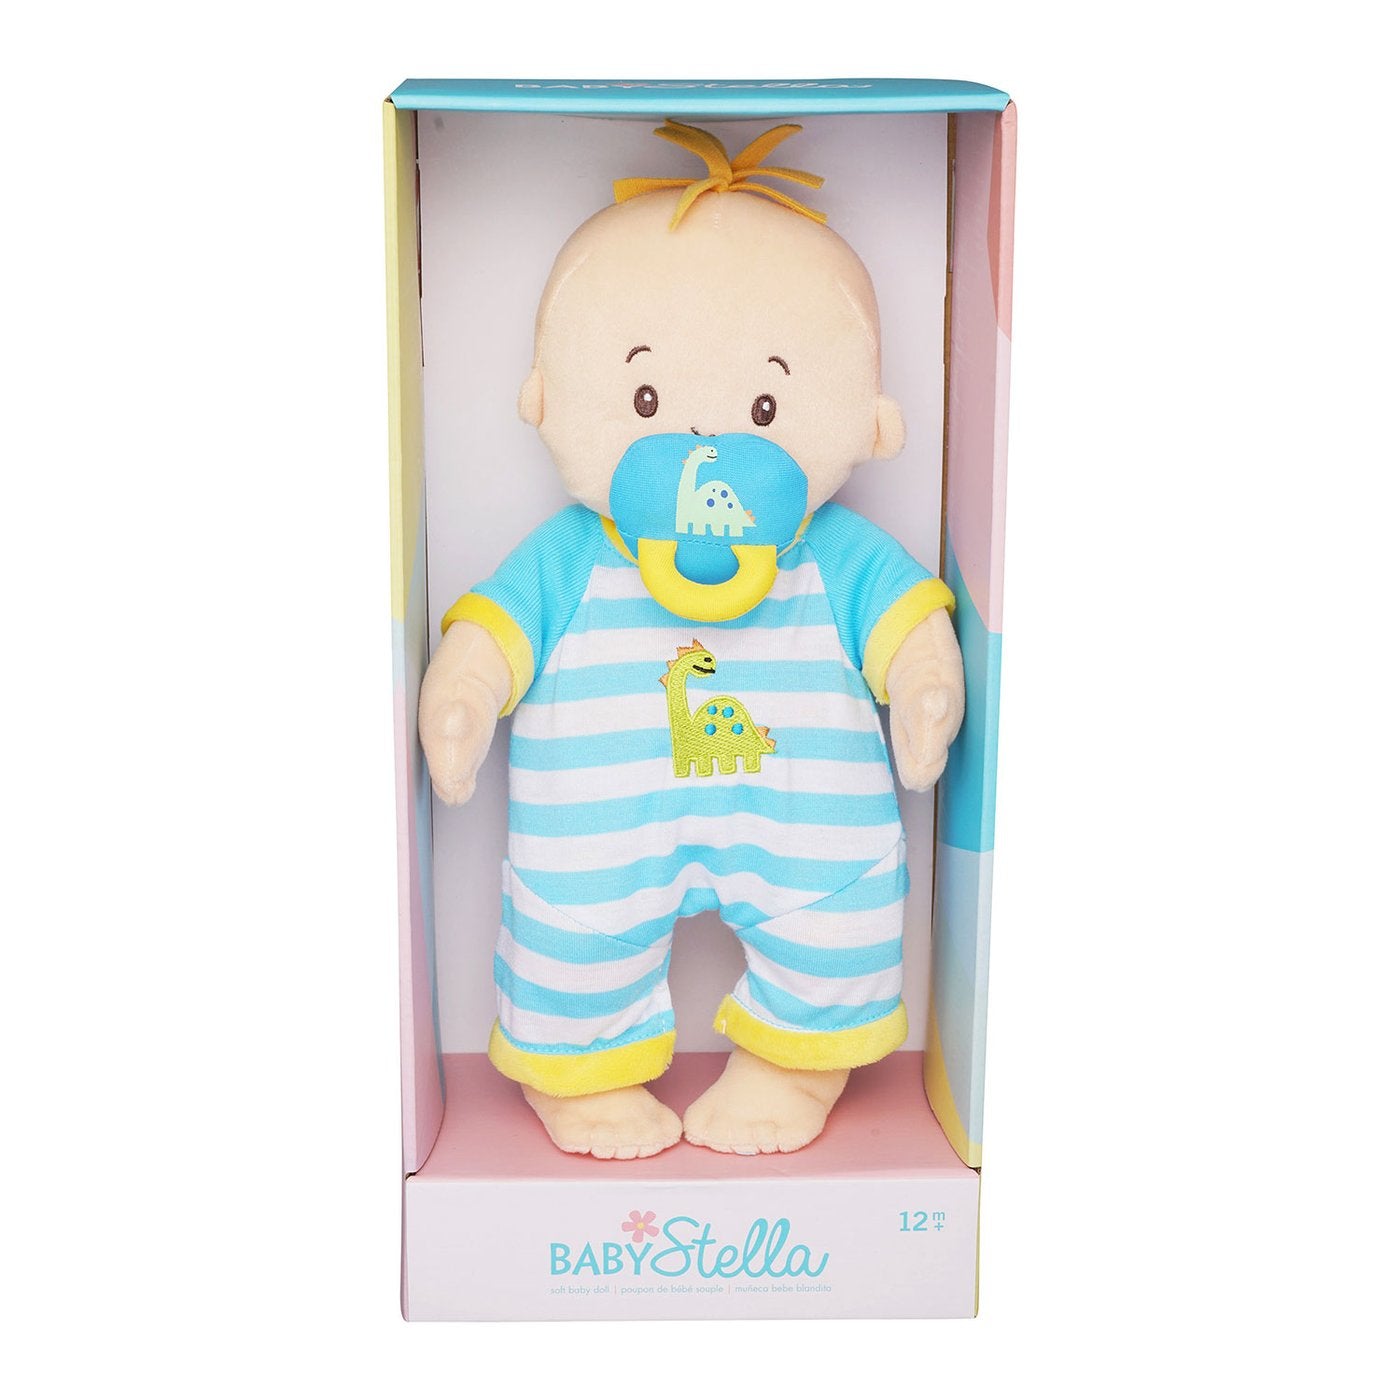 Manhattan Toy Baby Stella Fella Doll with Yellow Hair Toy - ANB Baby -$20 - $50